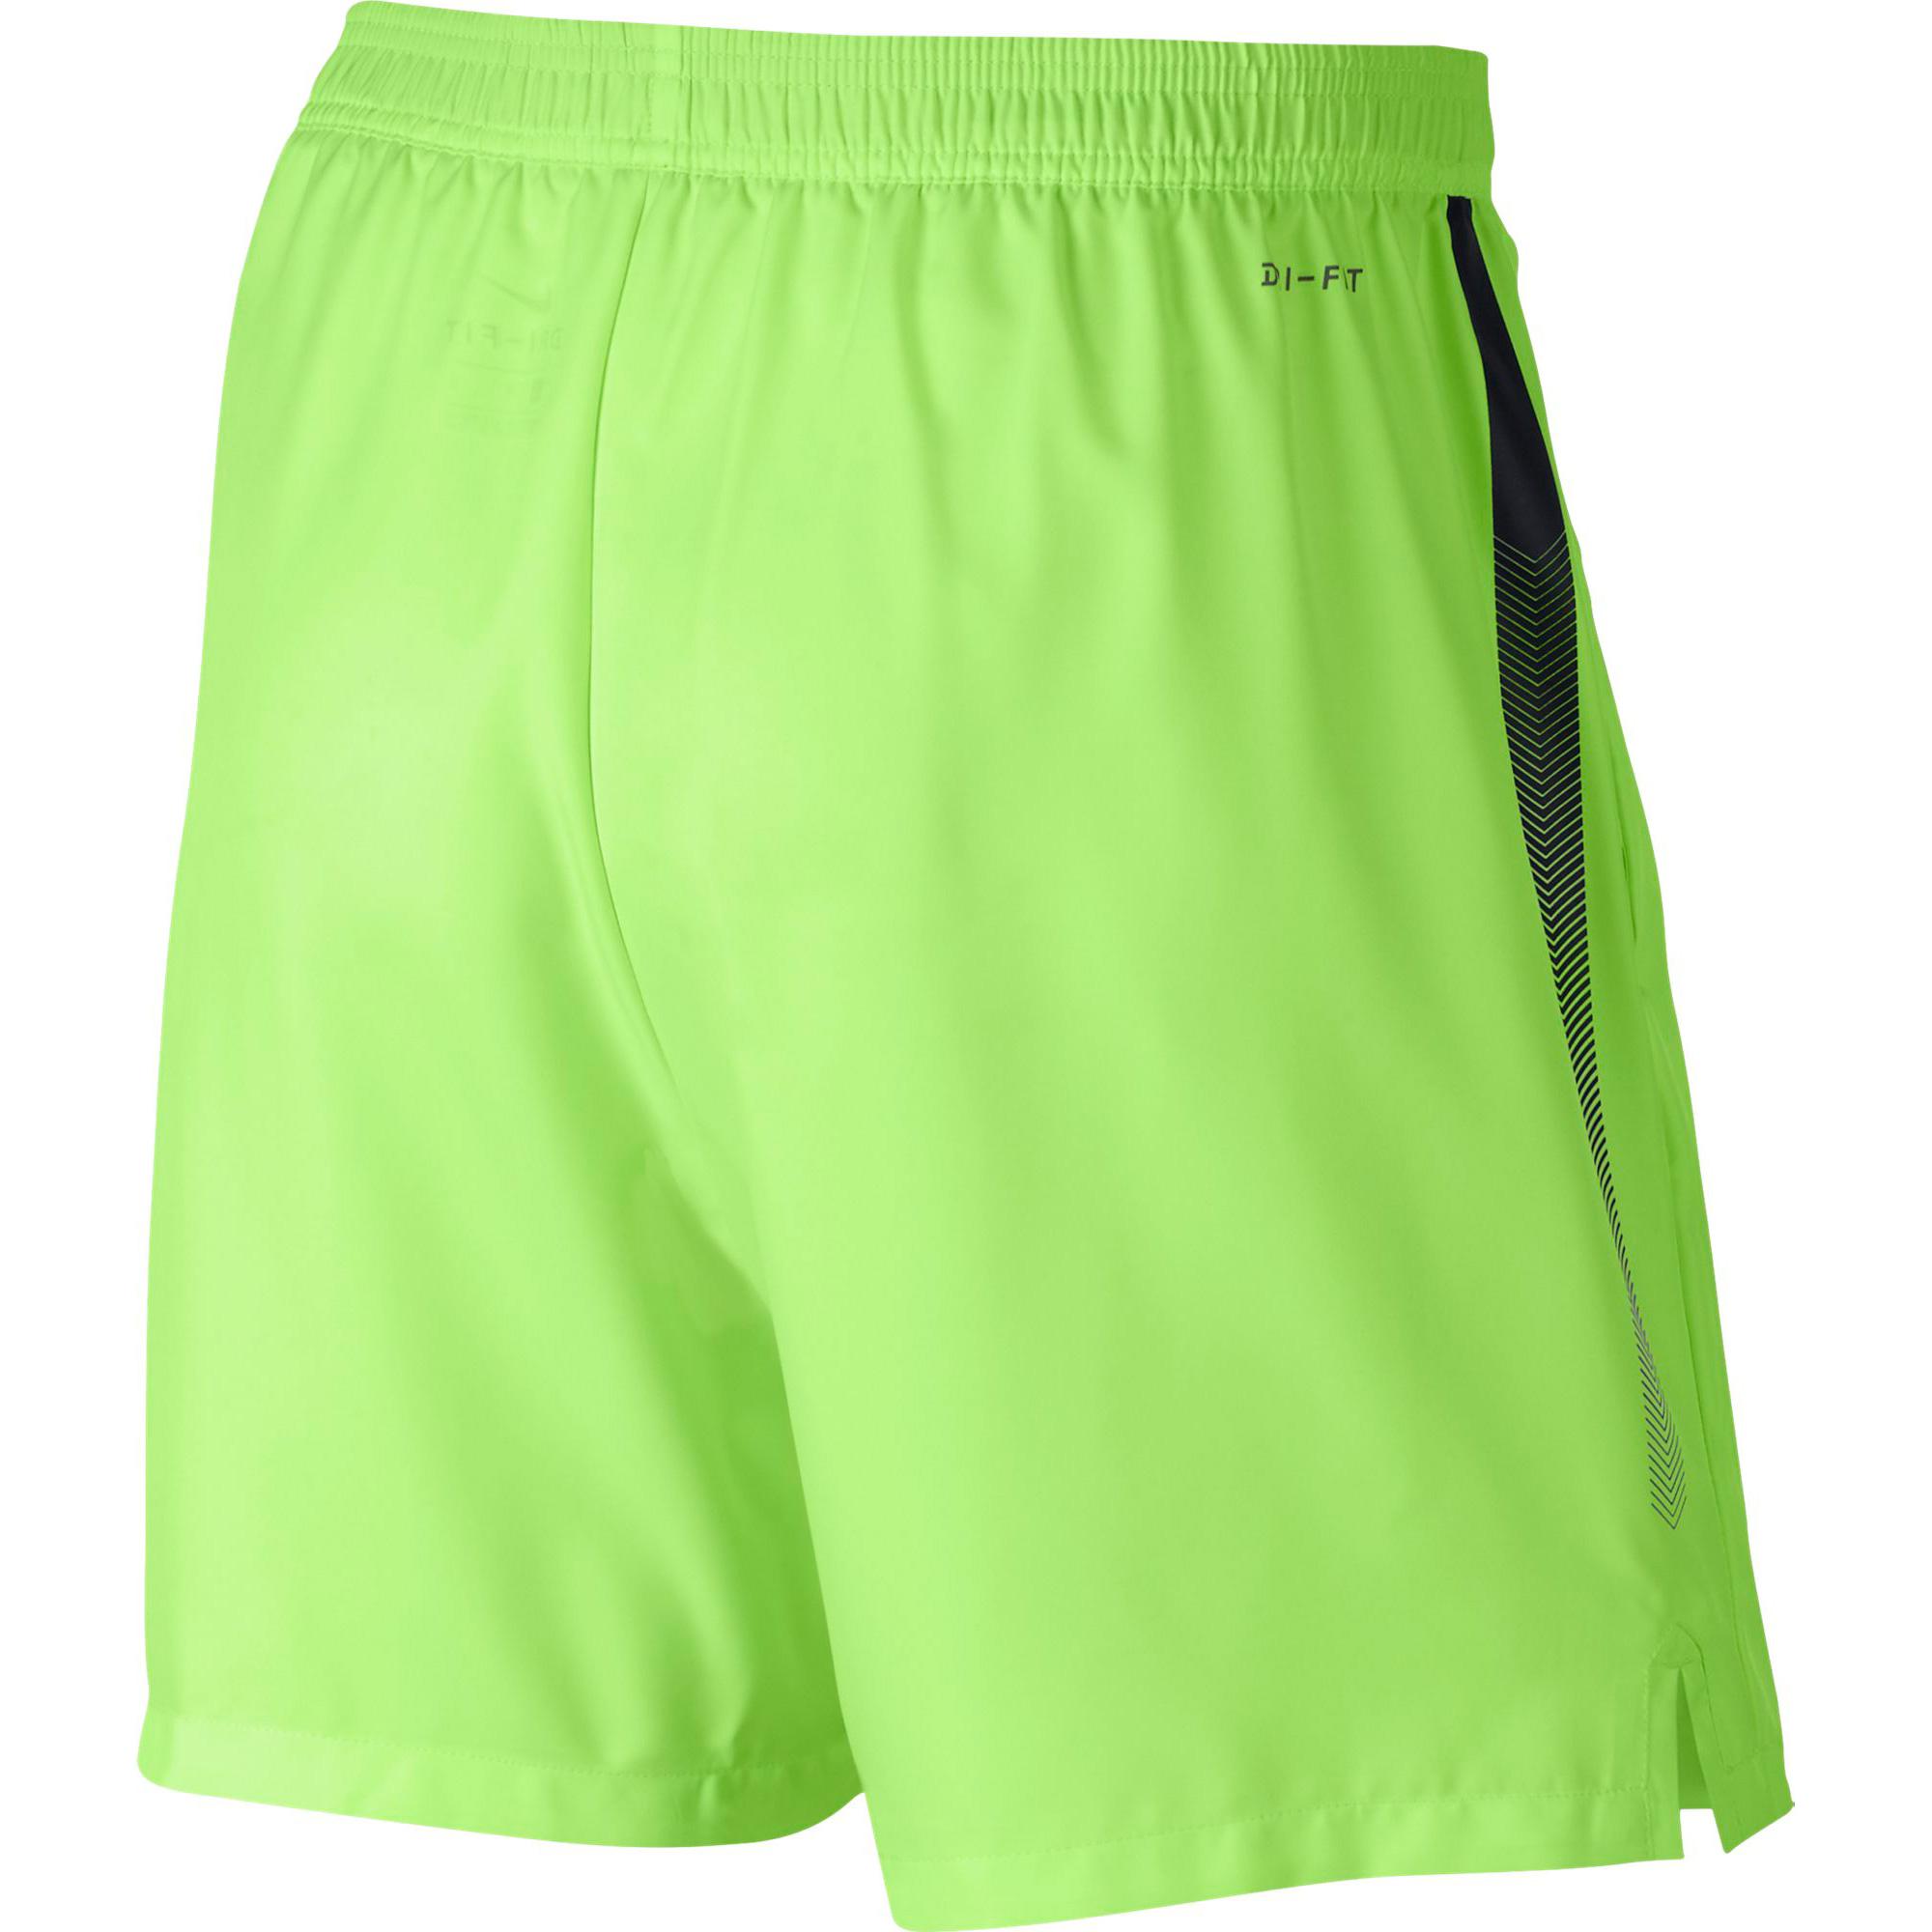 Nike Mens Dry 7 Inch Tennis Shorts - Ghost Green/Black - Tennisnuts.com